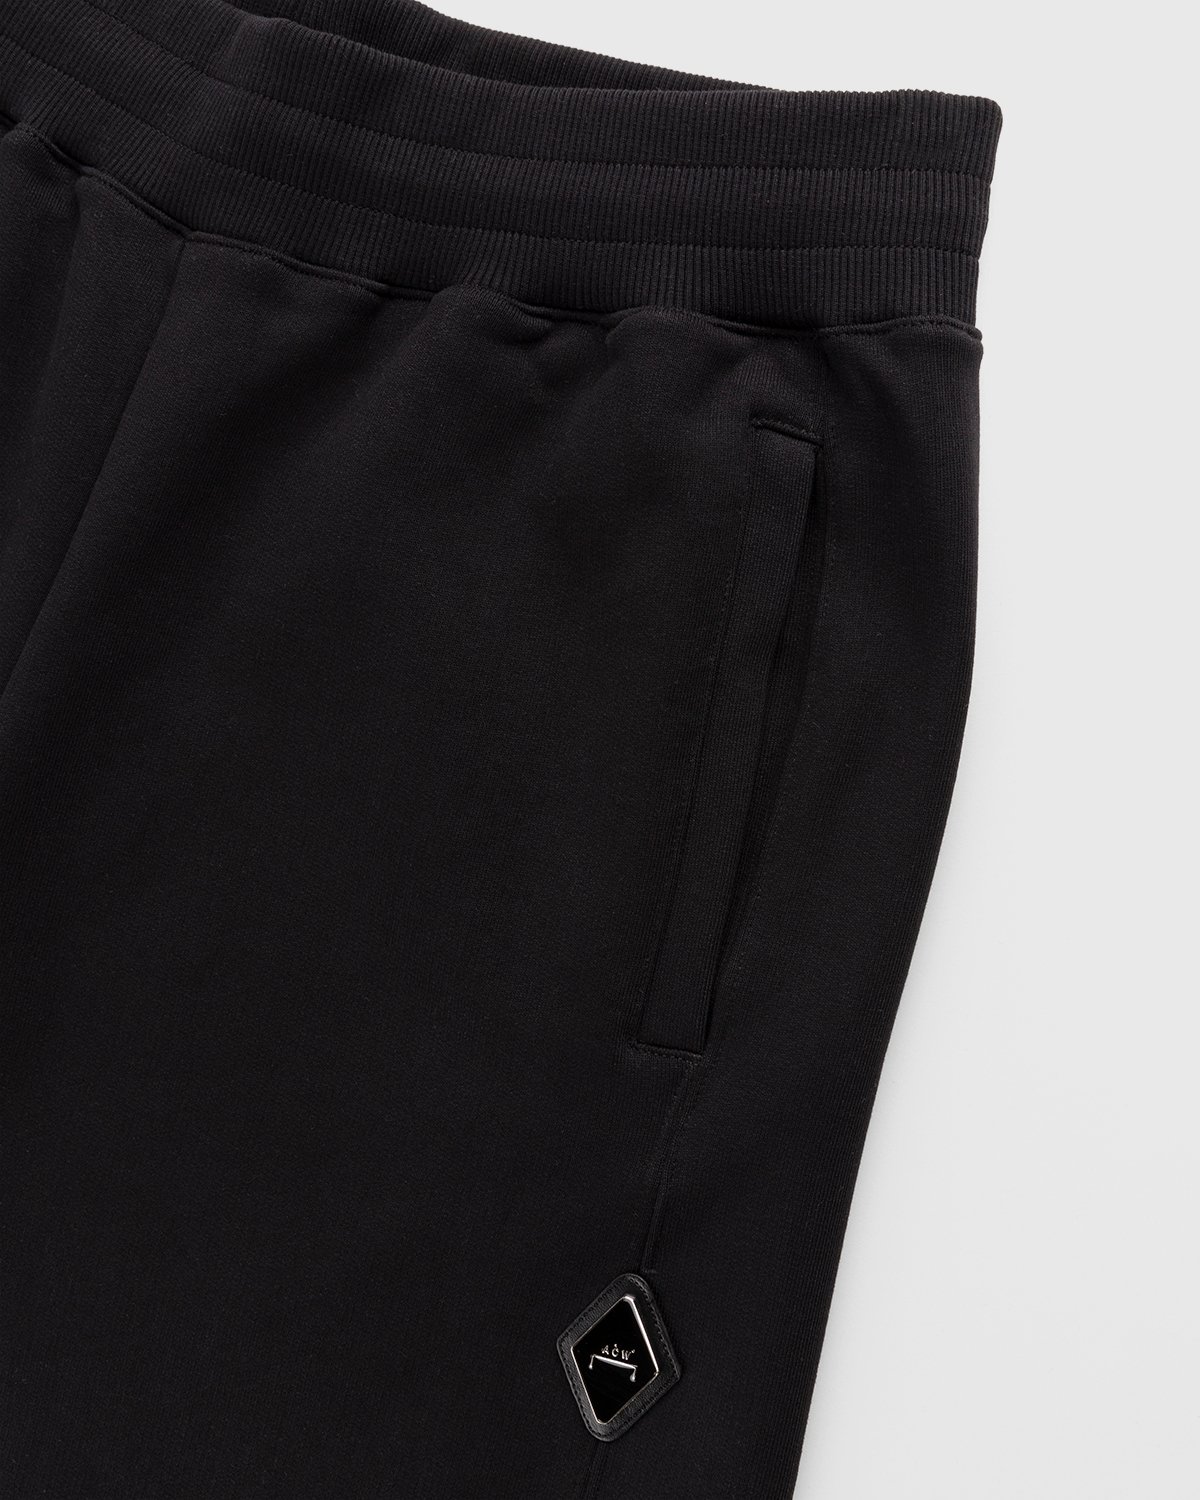 A-Cold-Wall* - Vault Shorts Black - Clothing - Black - Image 4